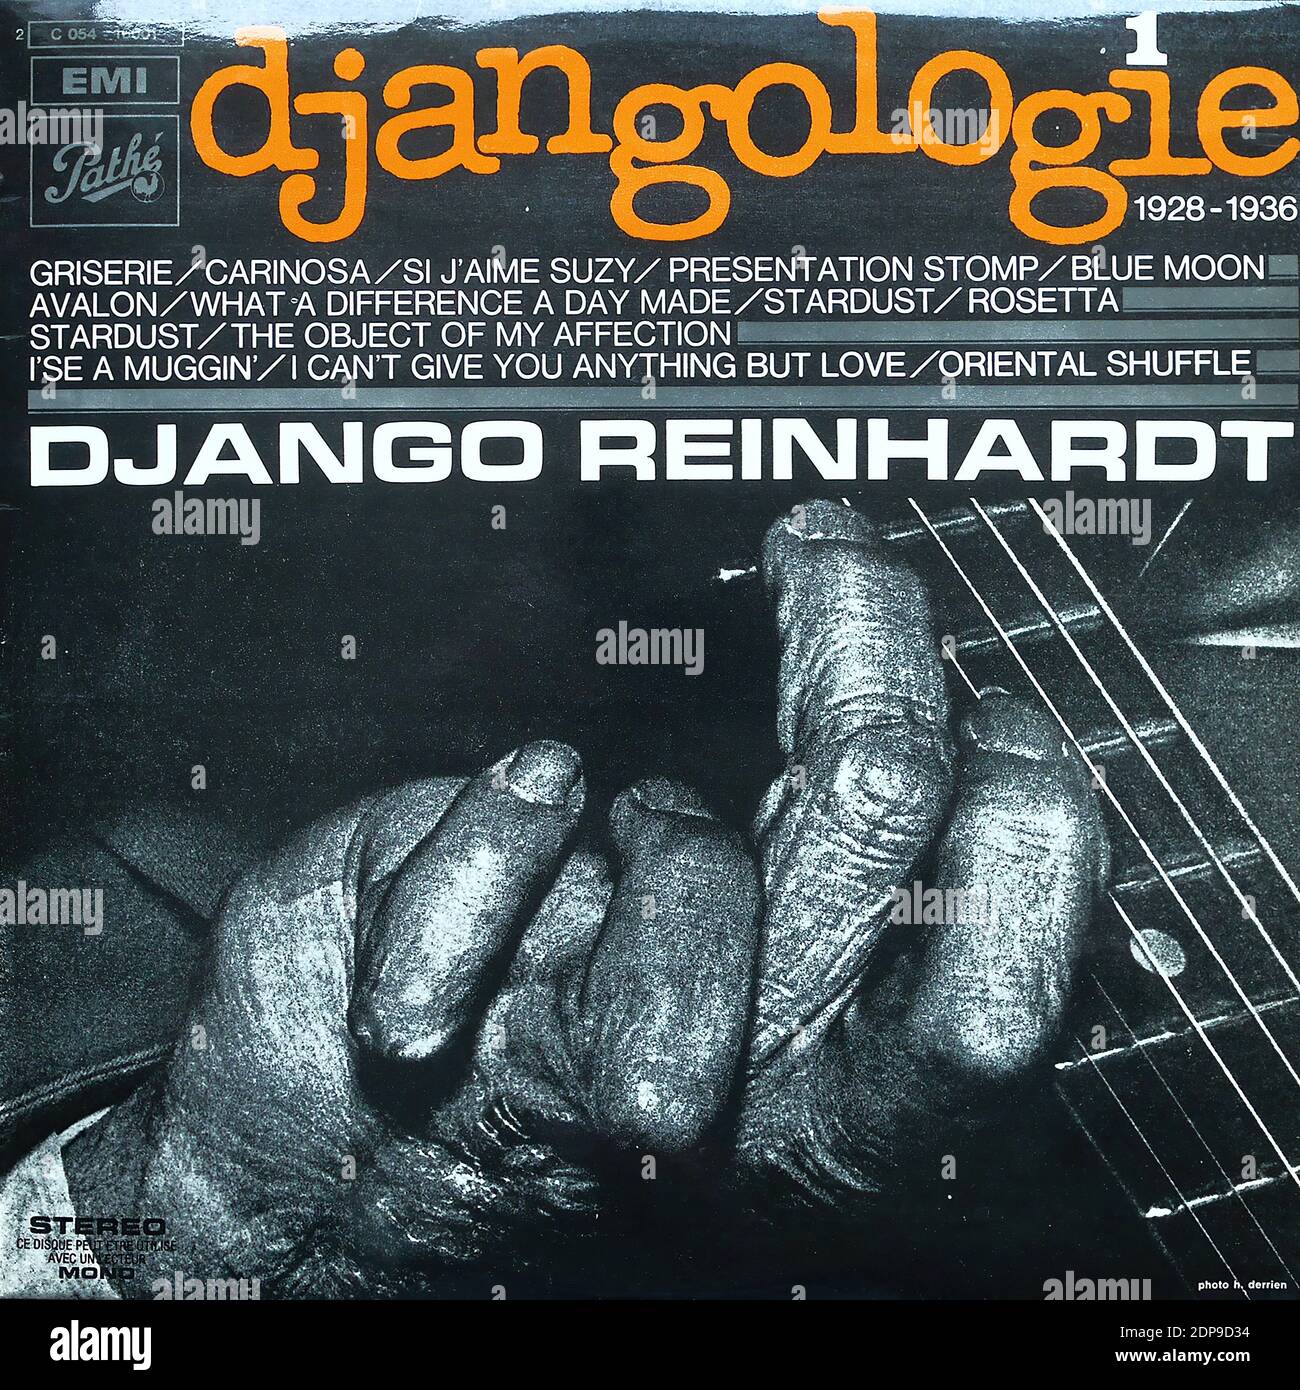 Djangologie - Griserie e.o. - Jean Vaissade Accordion, Django Reinhardt  Banjo, EMI 2 C 054-16001, 1928-1936, Vol.1 of 20 - Vintage vinyl album  cover Stock Photo - Alamy